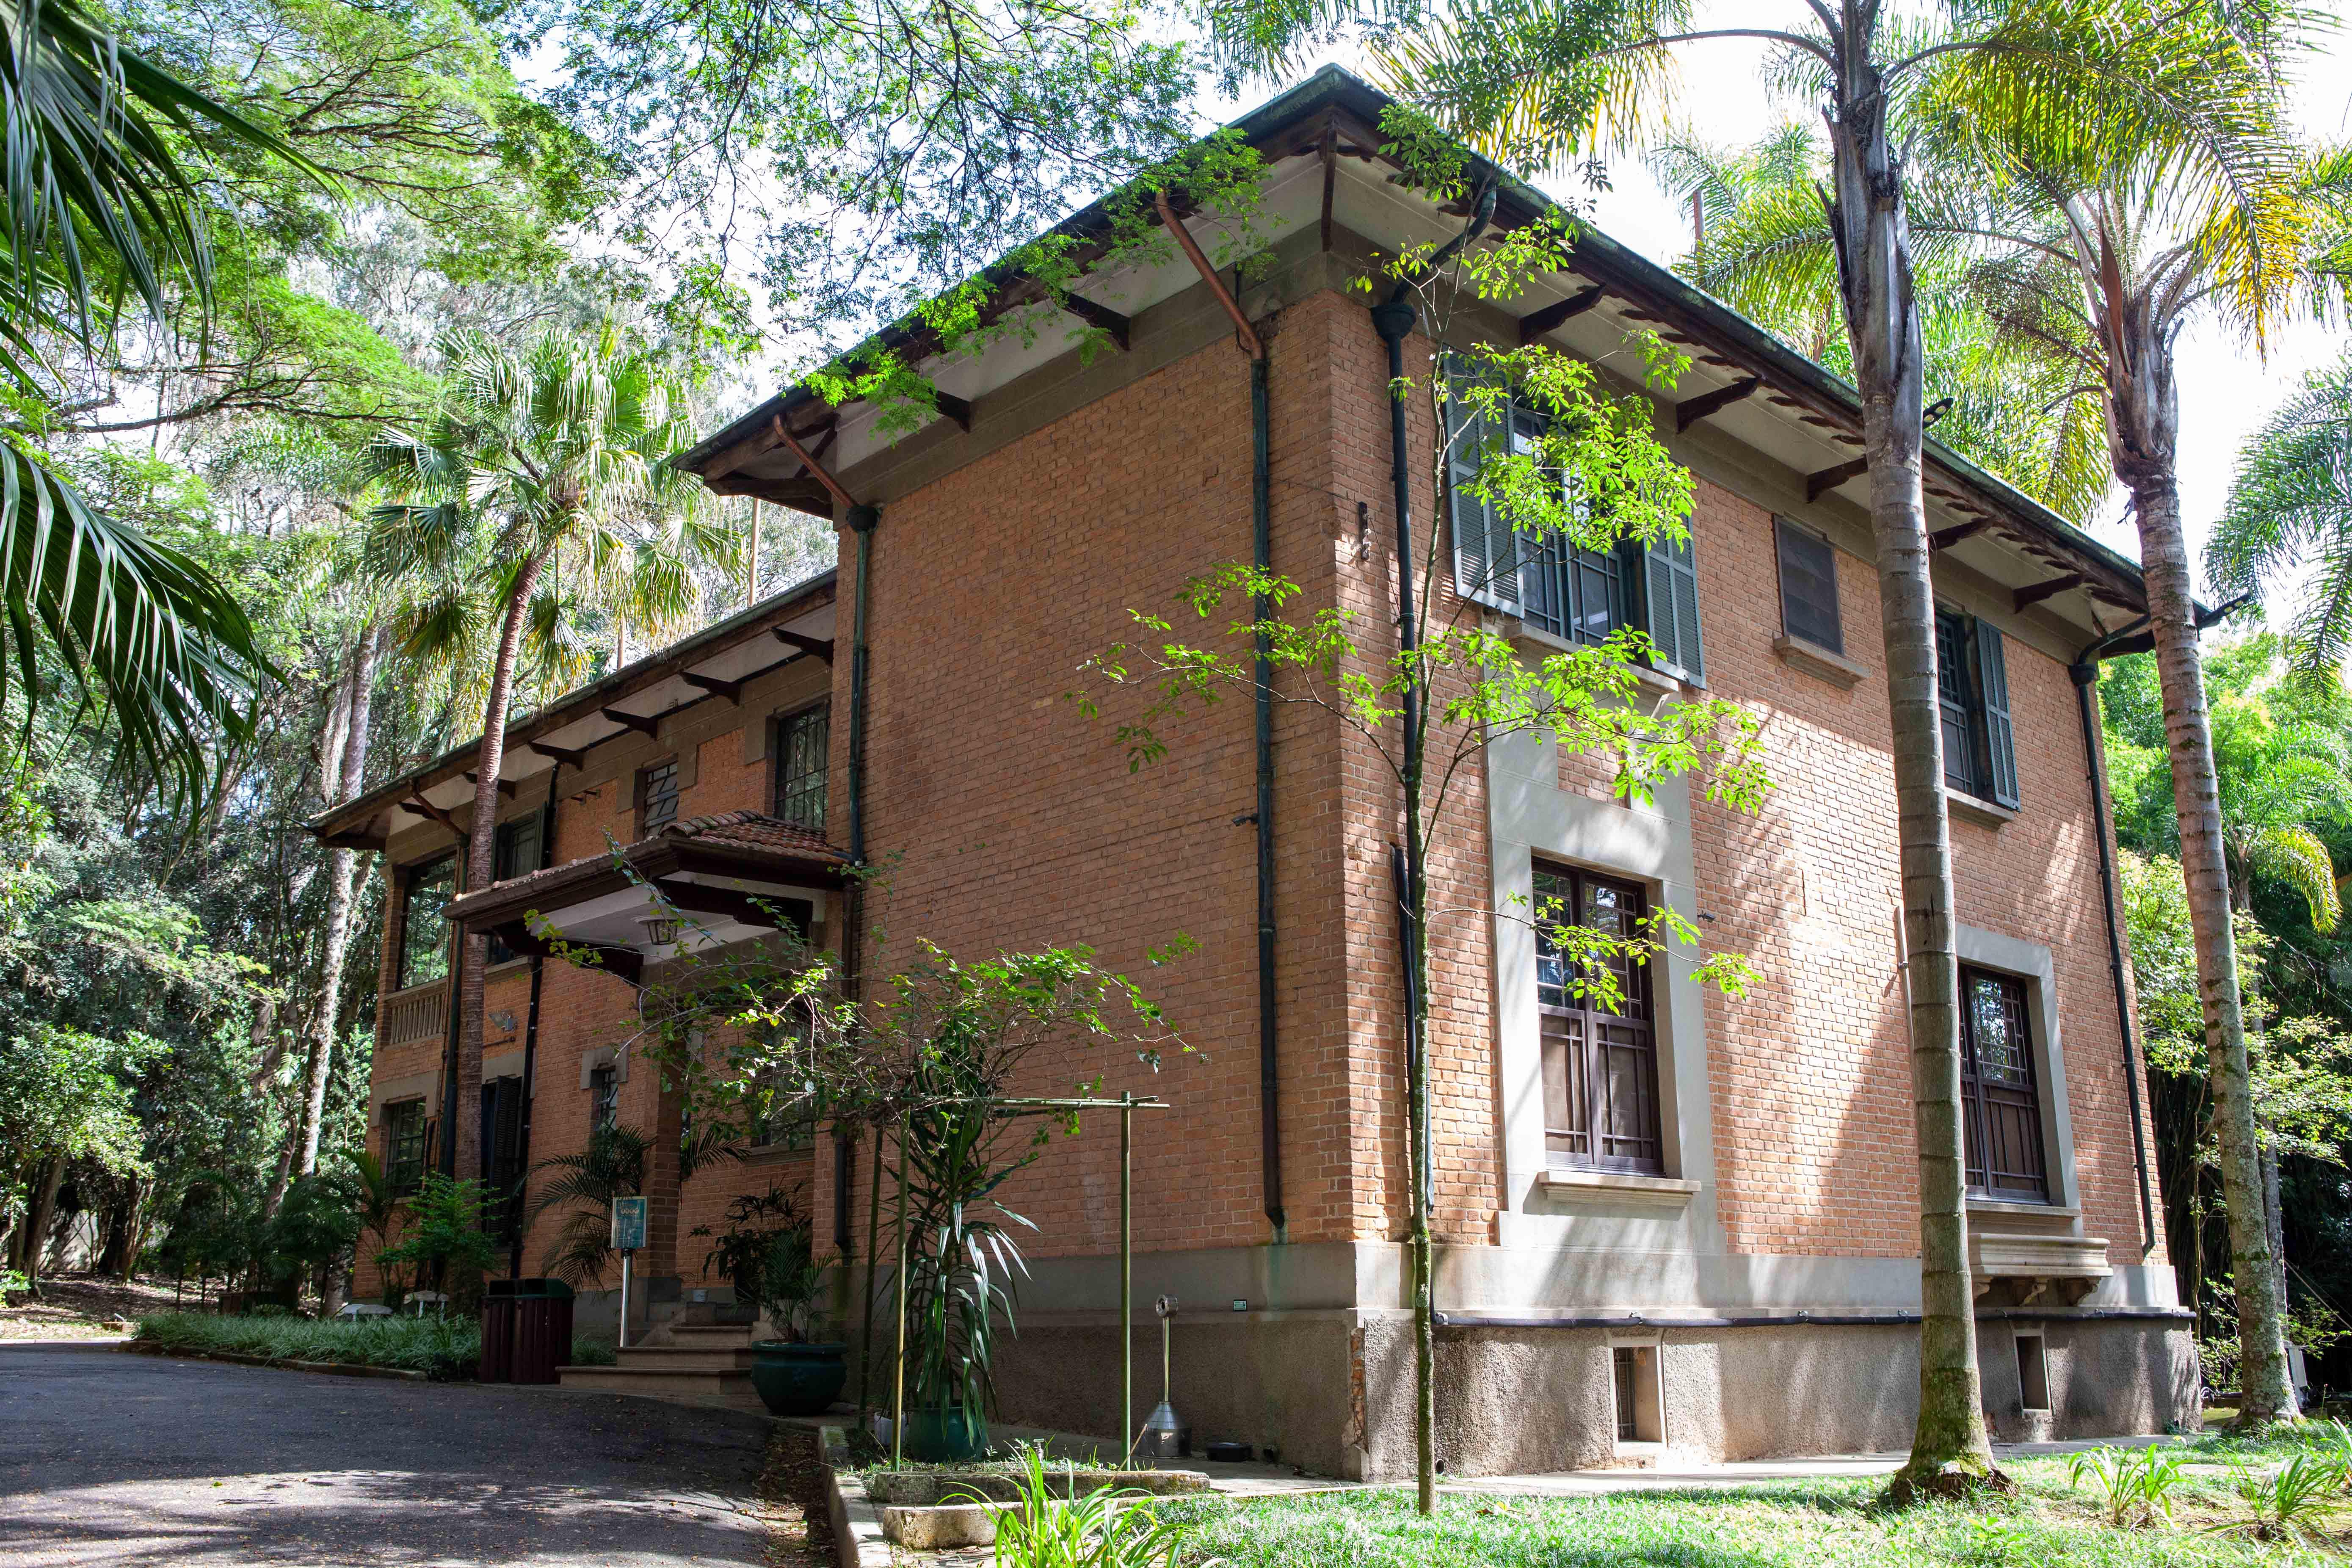 Casa Afrânio do Amaral was built by director Afrânio Pompílio Gastos do Amaral, who ran the Bhutantan Institute between 1919 and 1938.